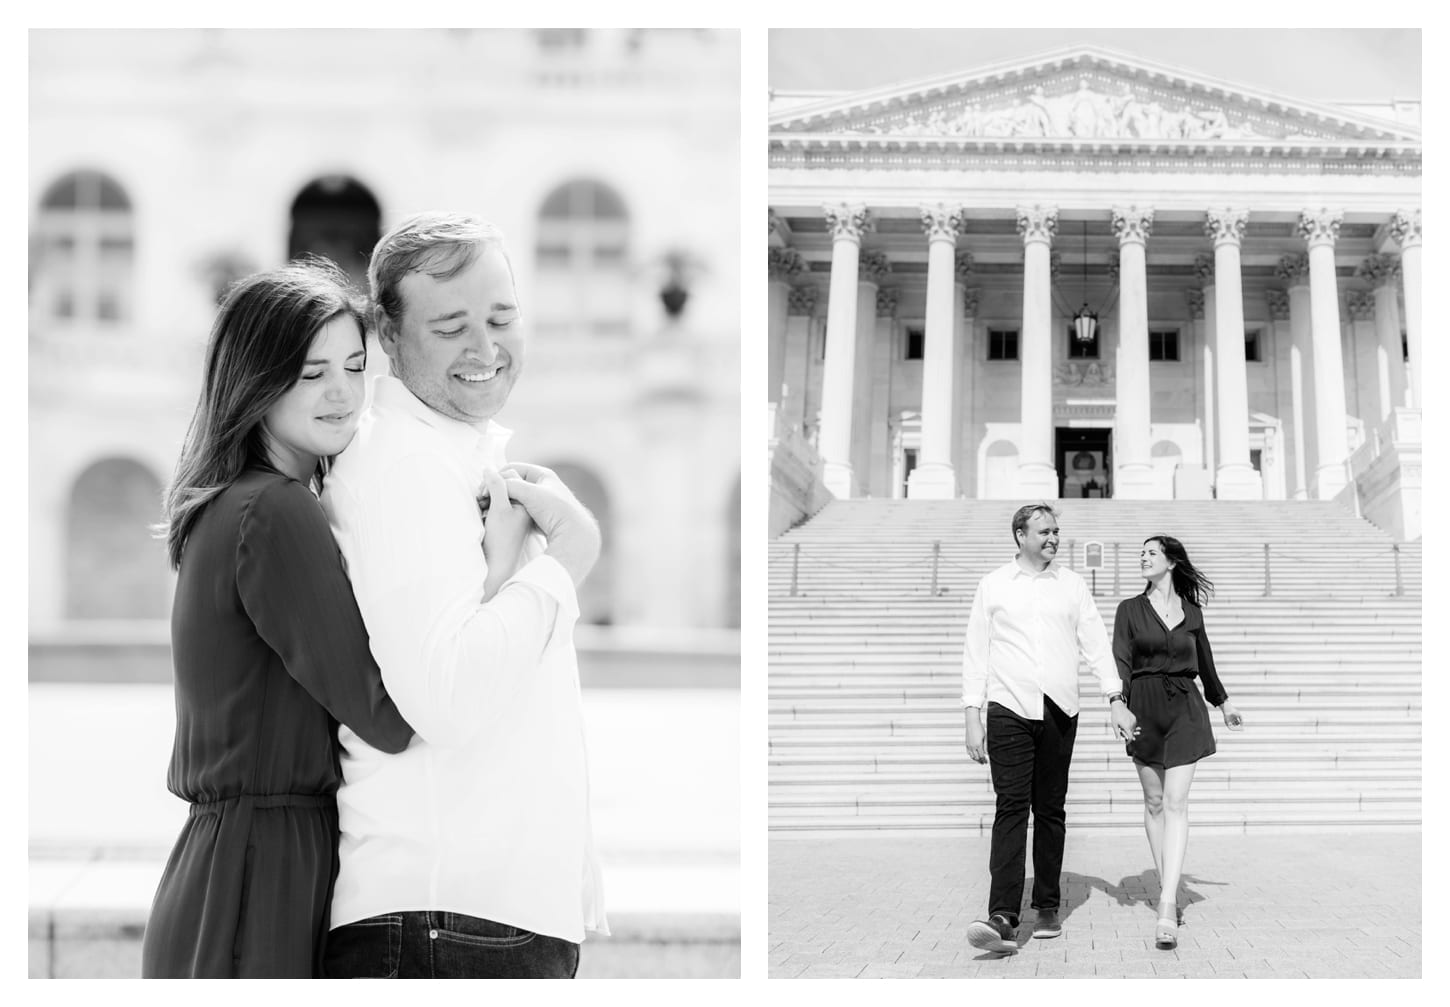 Washington D.C. engagement photographer